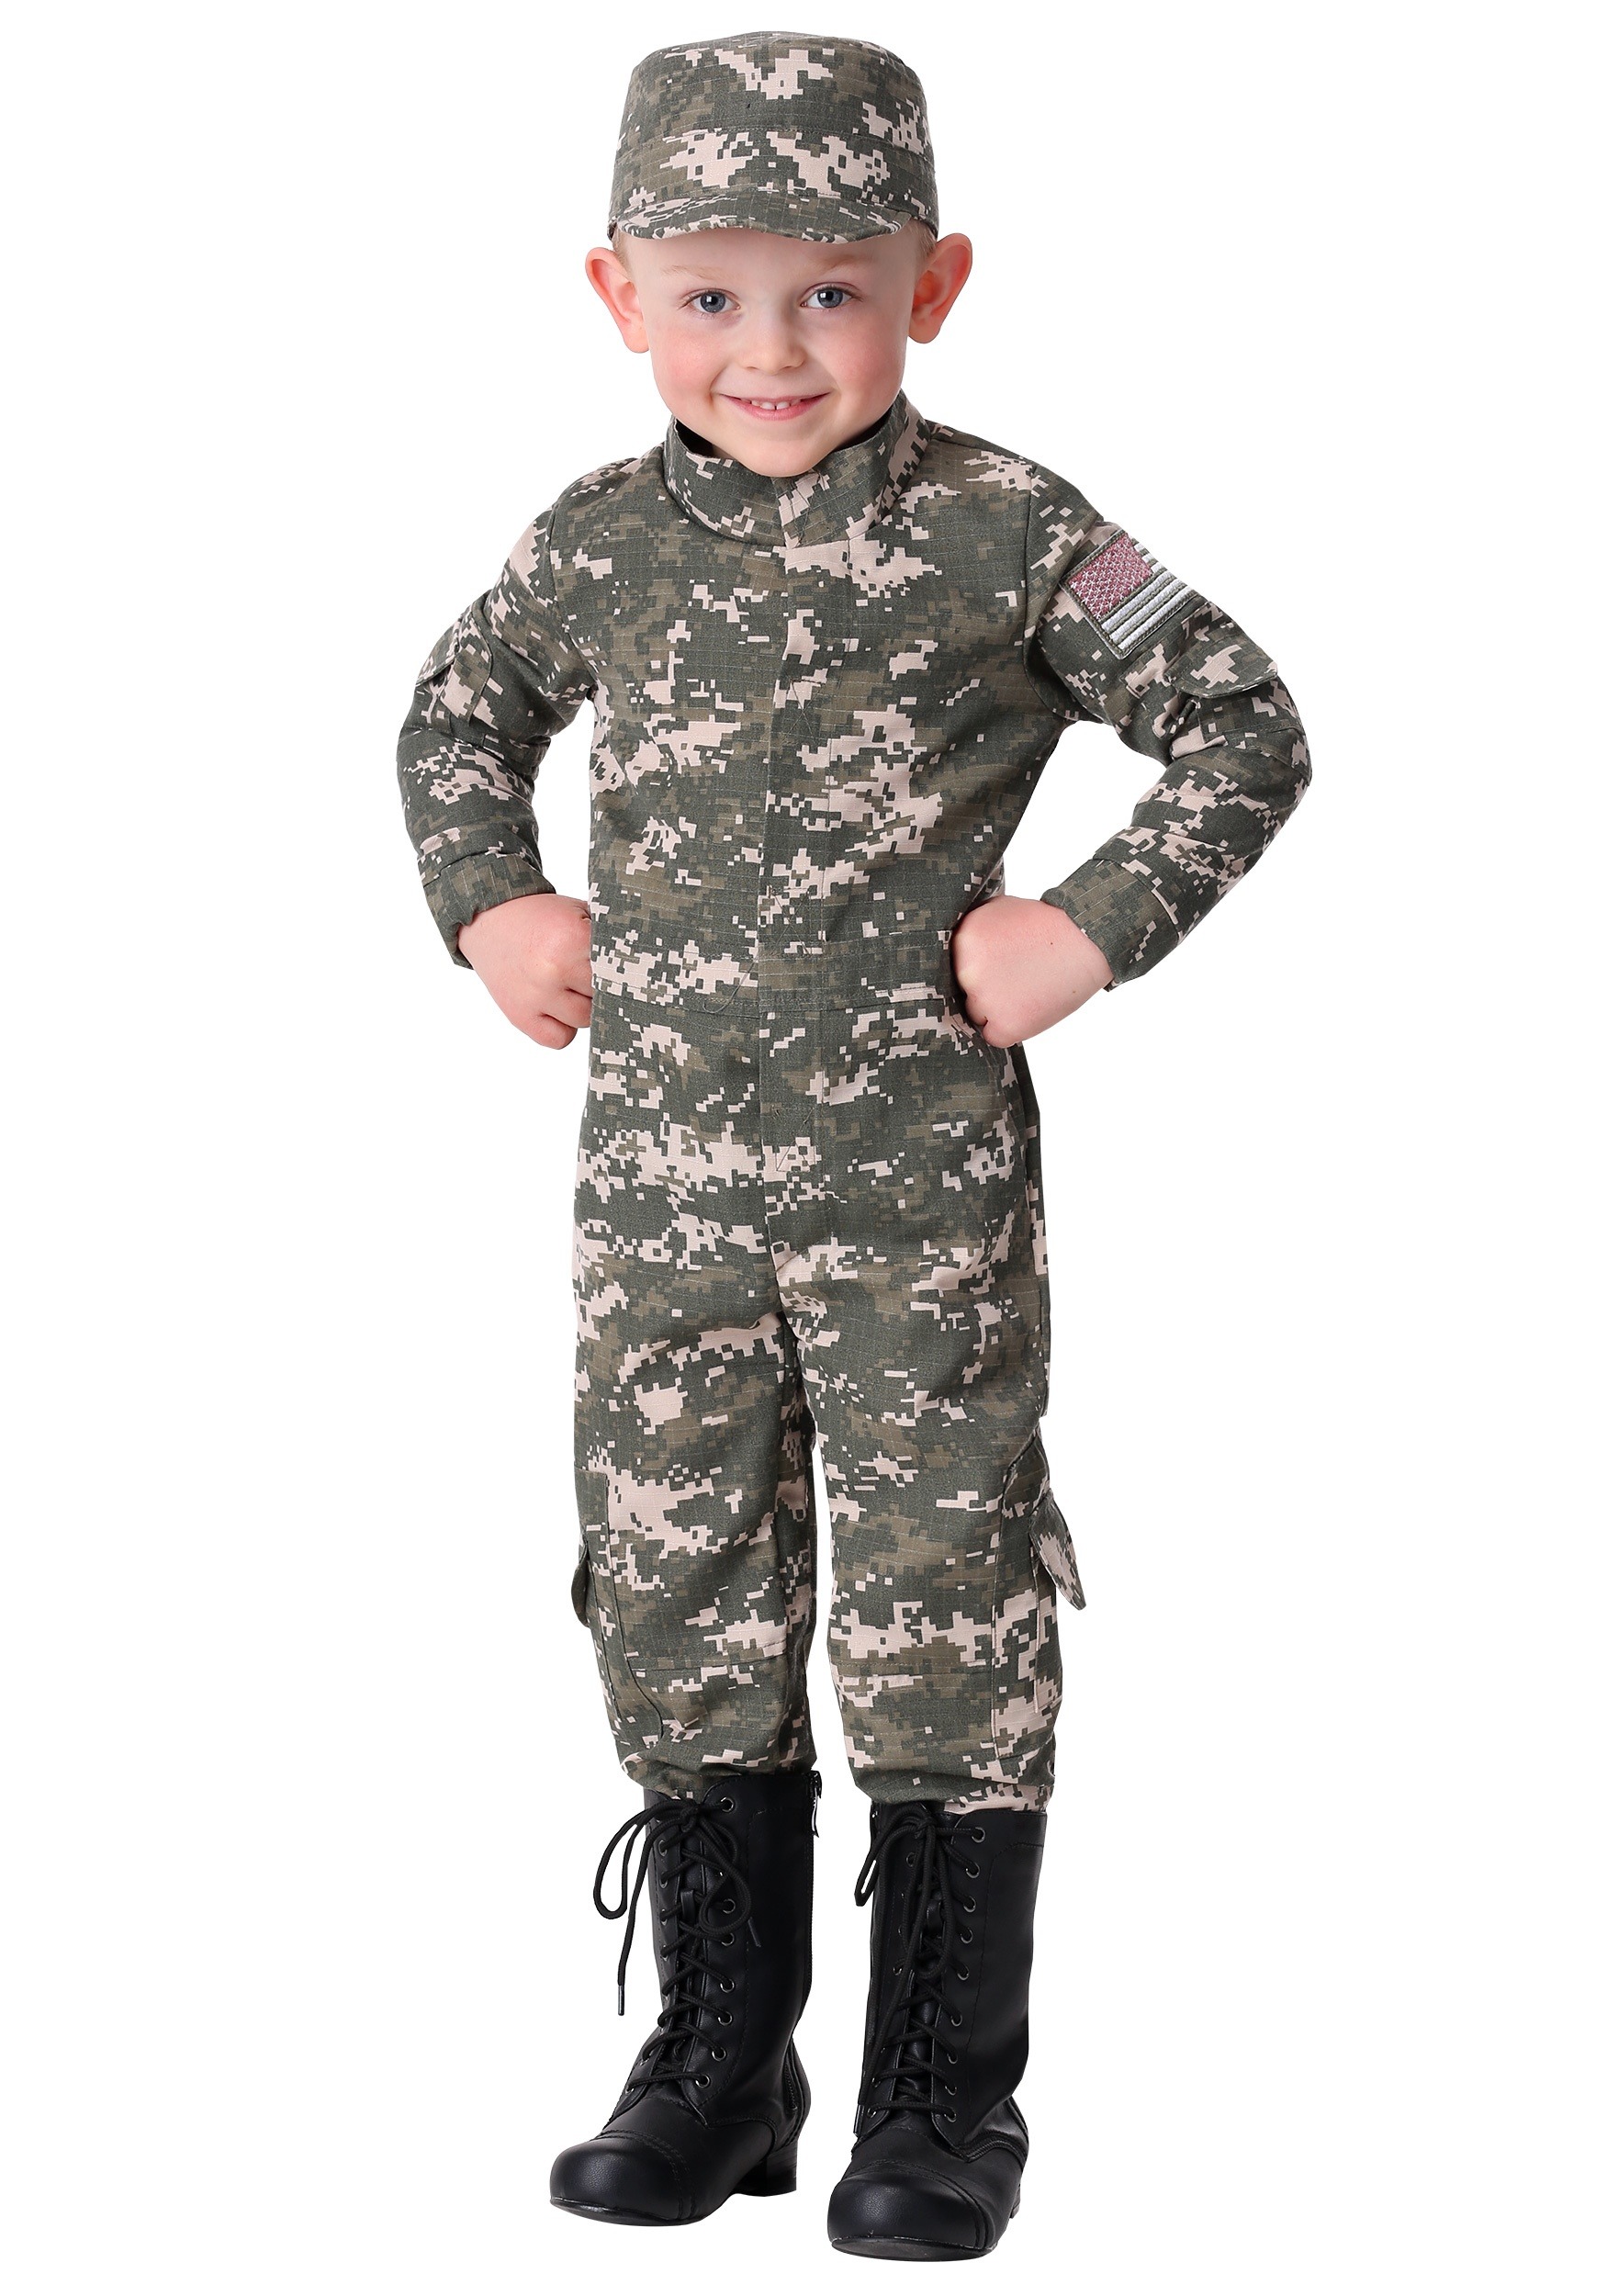 Modern Combat Toddler's Uniform Costume